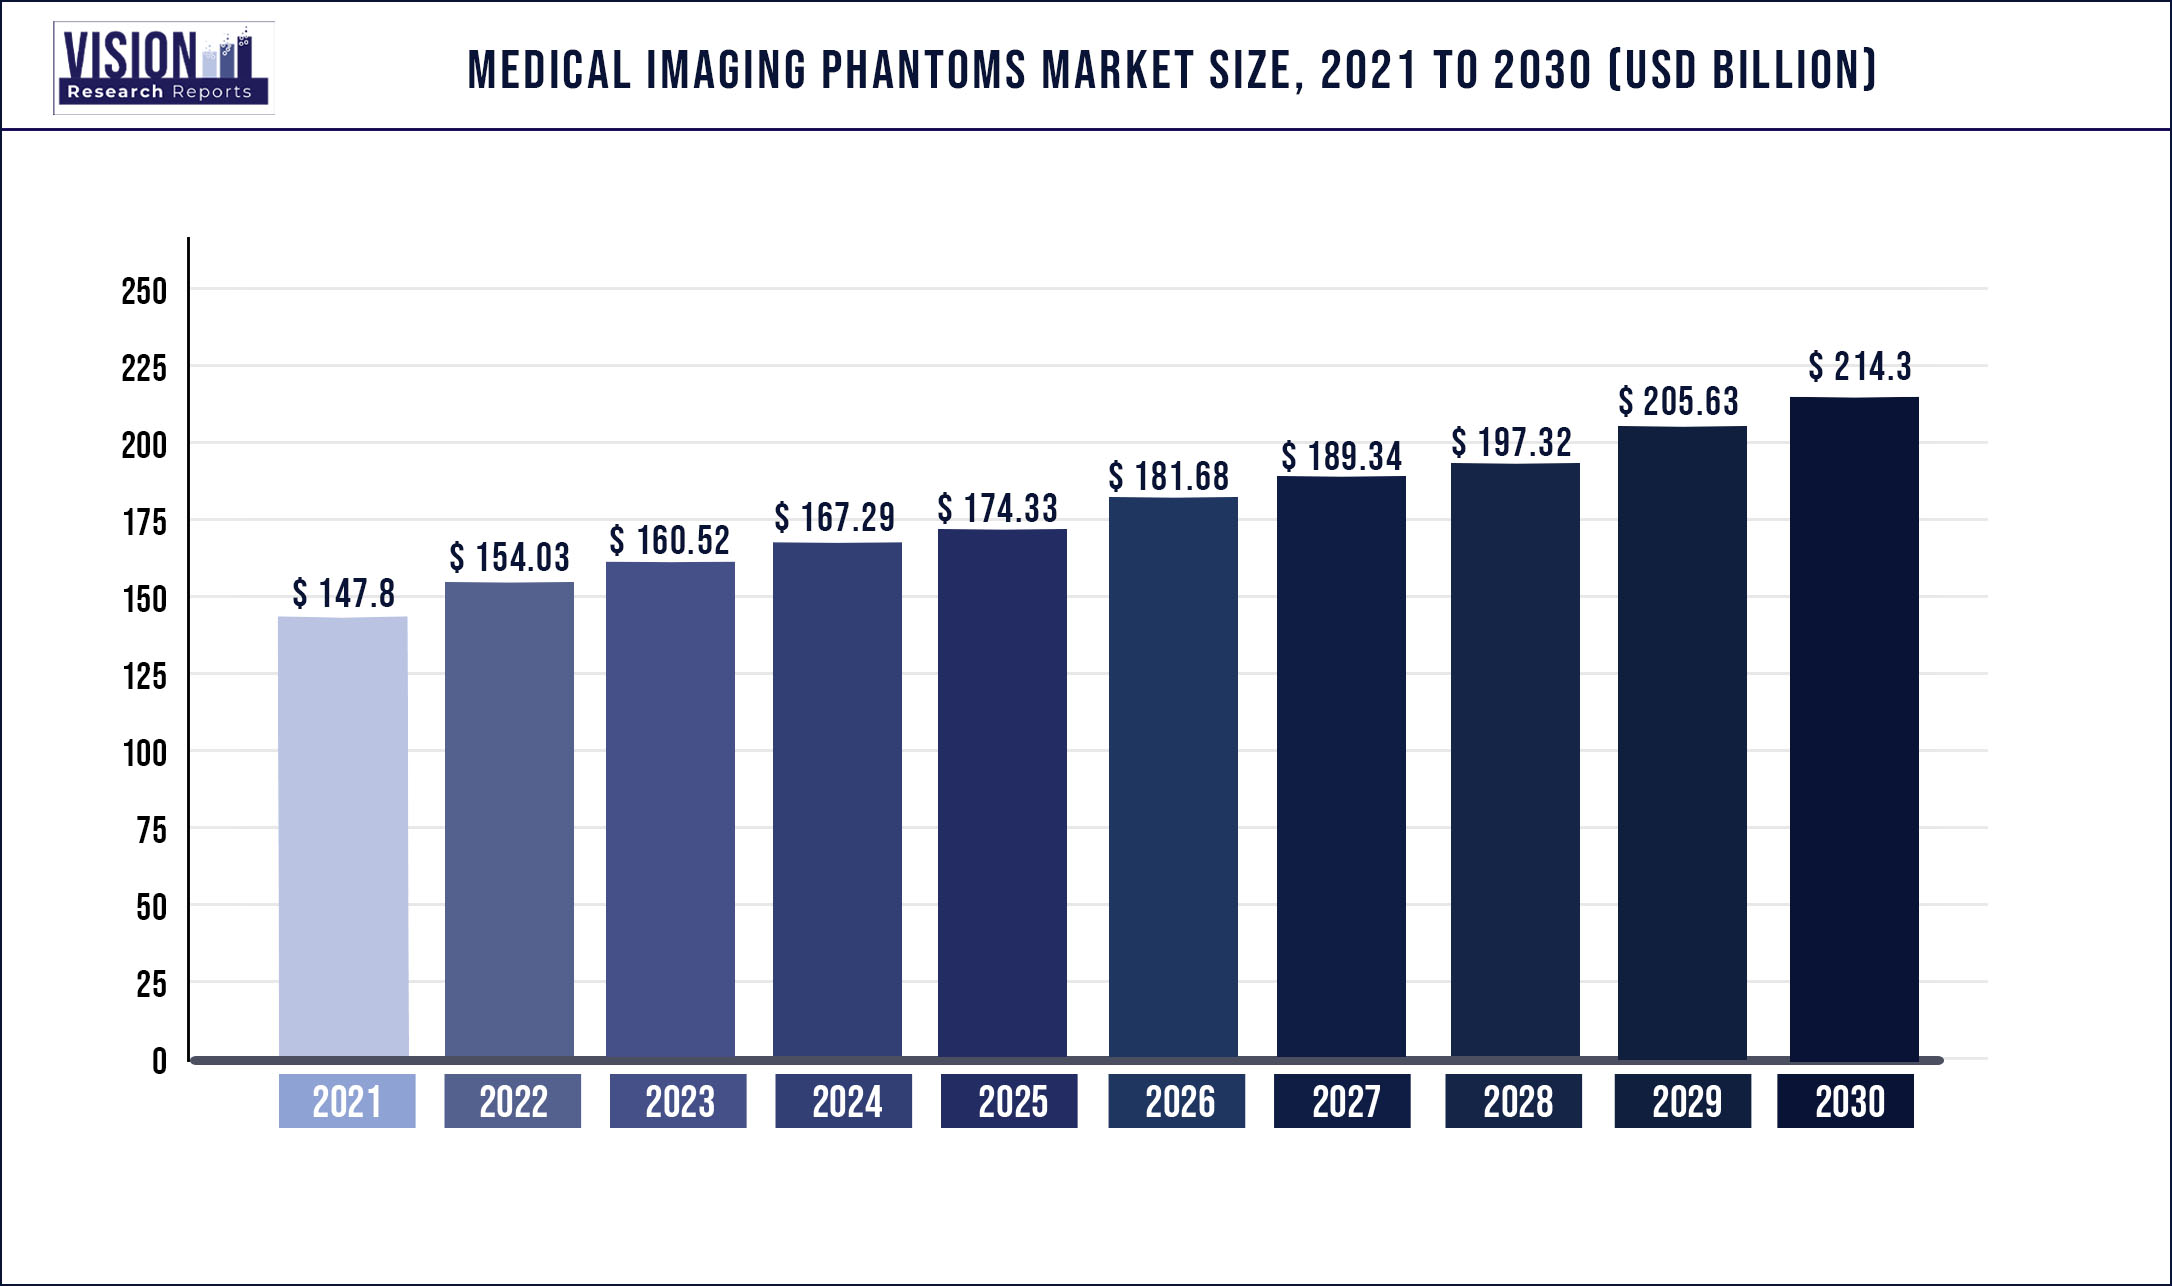 Medical Imaging Phantoms Market Size 2021 to 2030